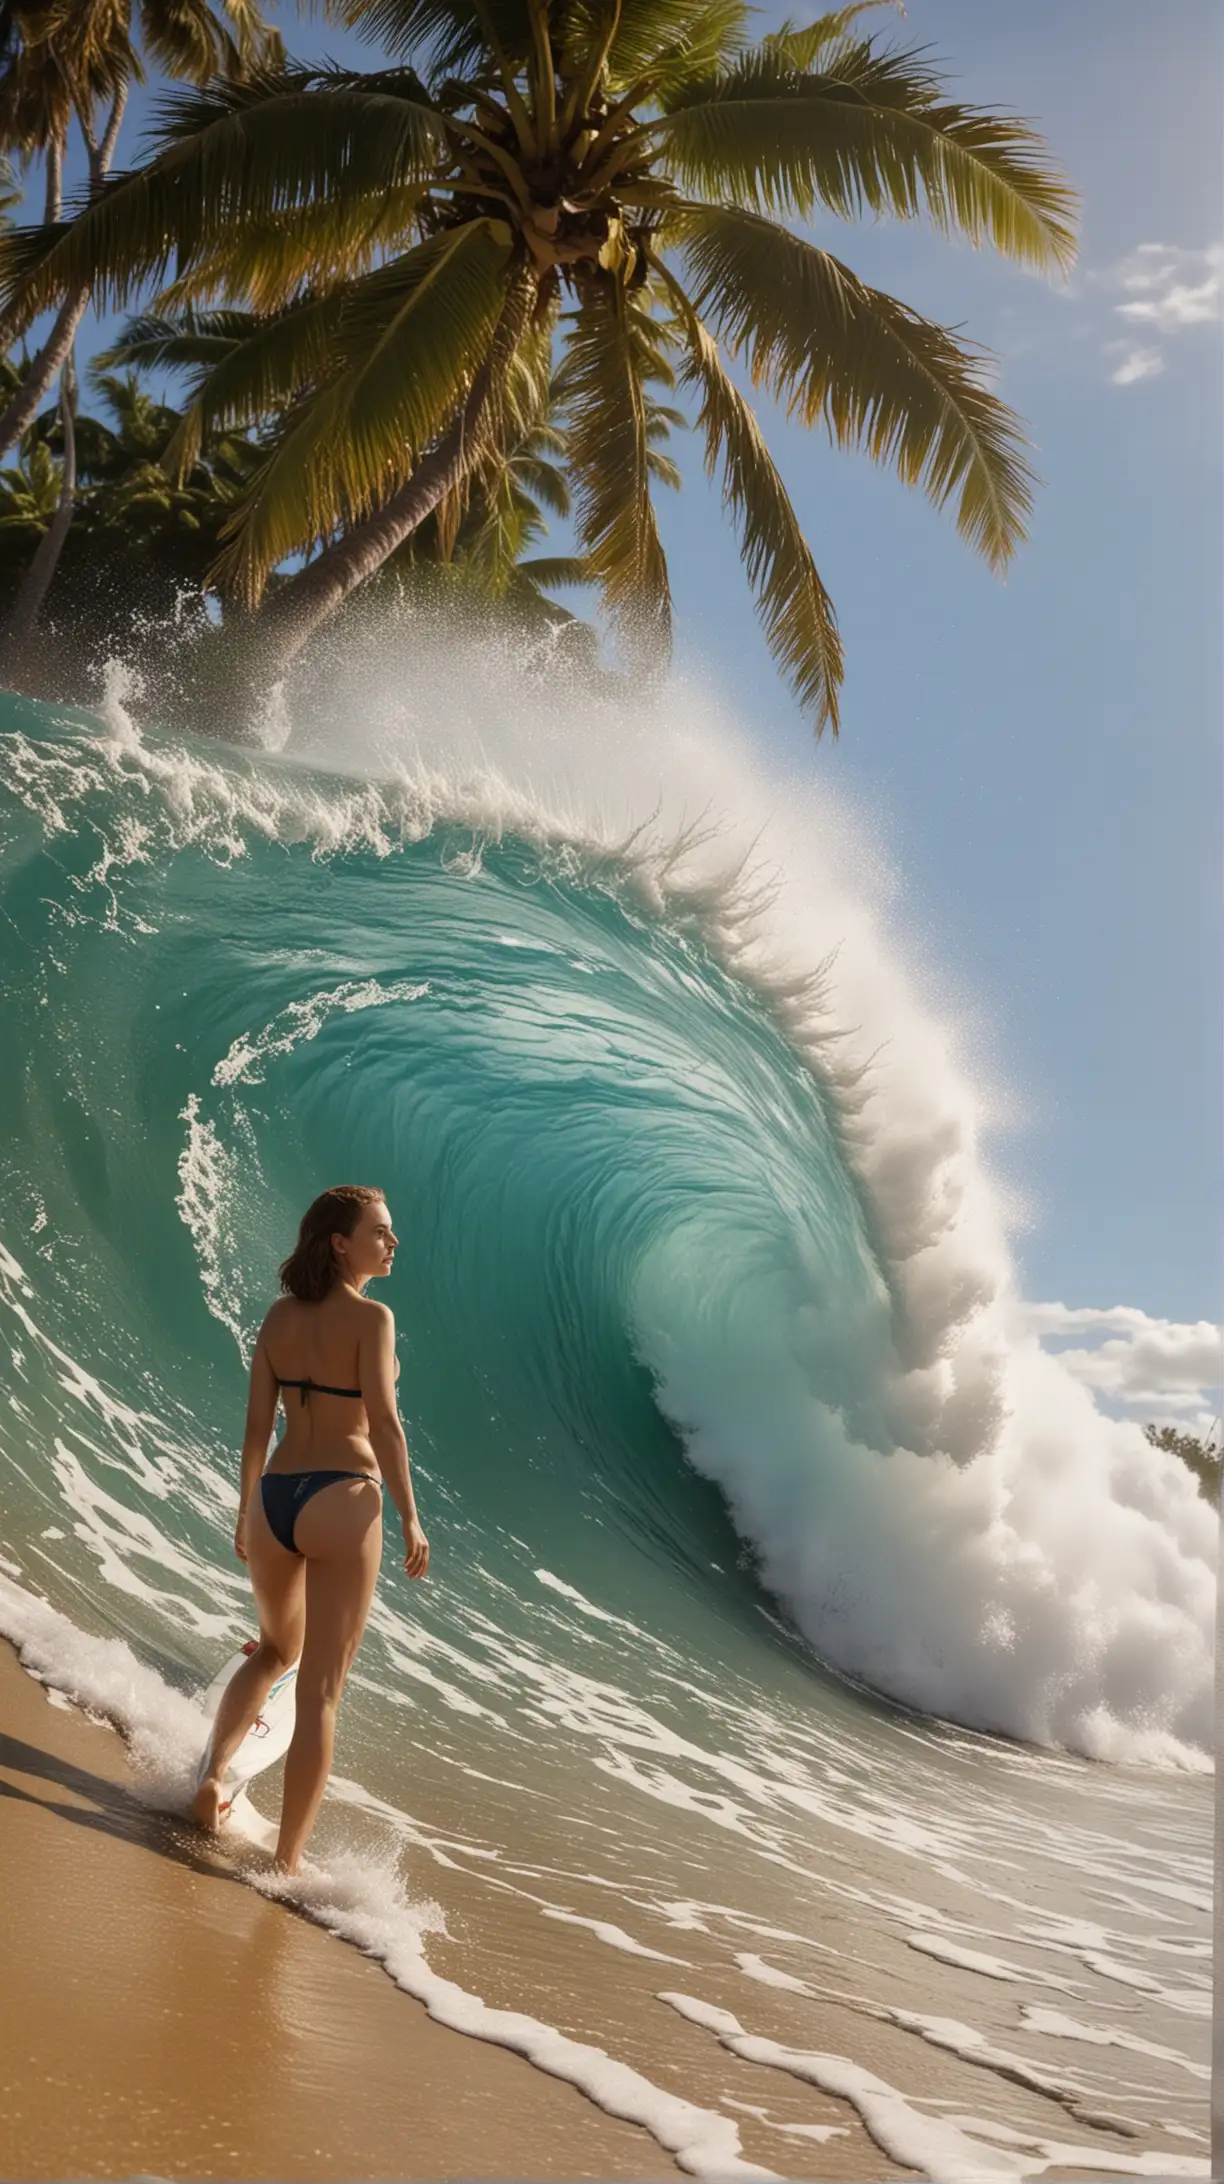 Natalie Portman Surfs in the Tube of a Huge Wave in Brazilian Swimsuit